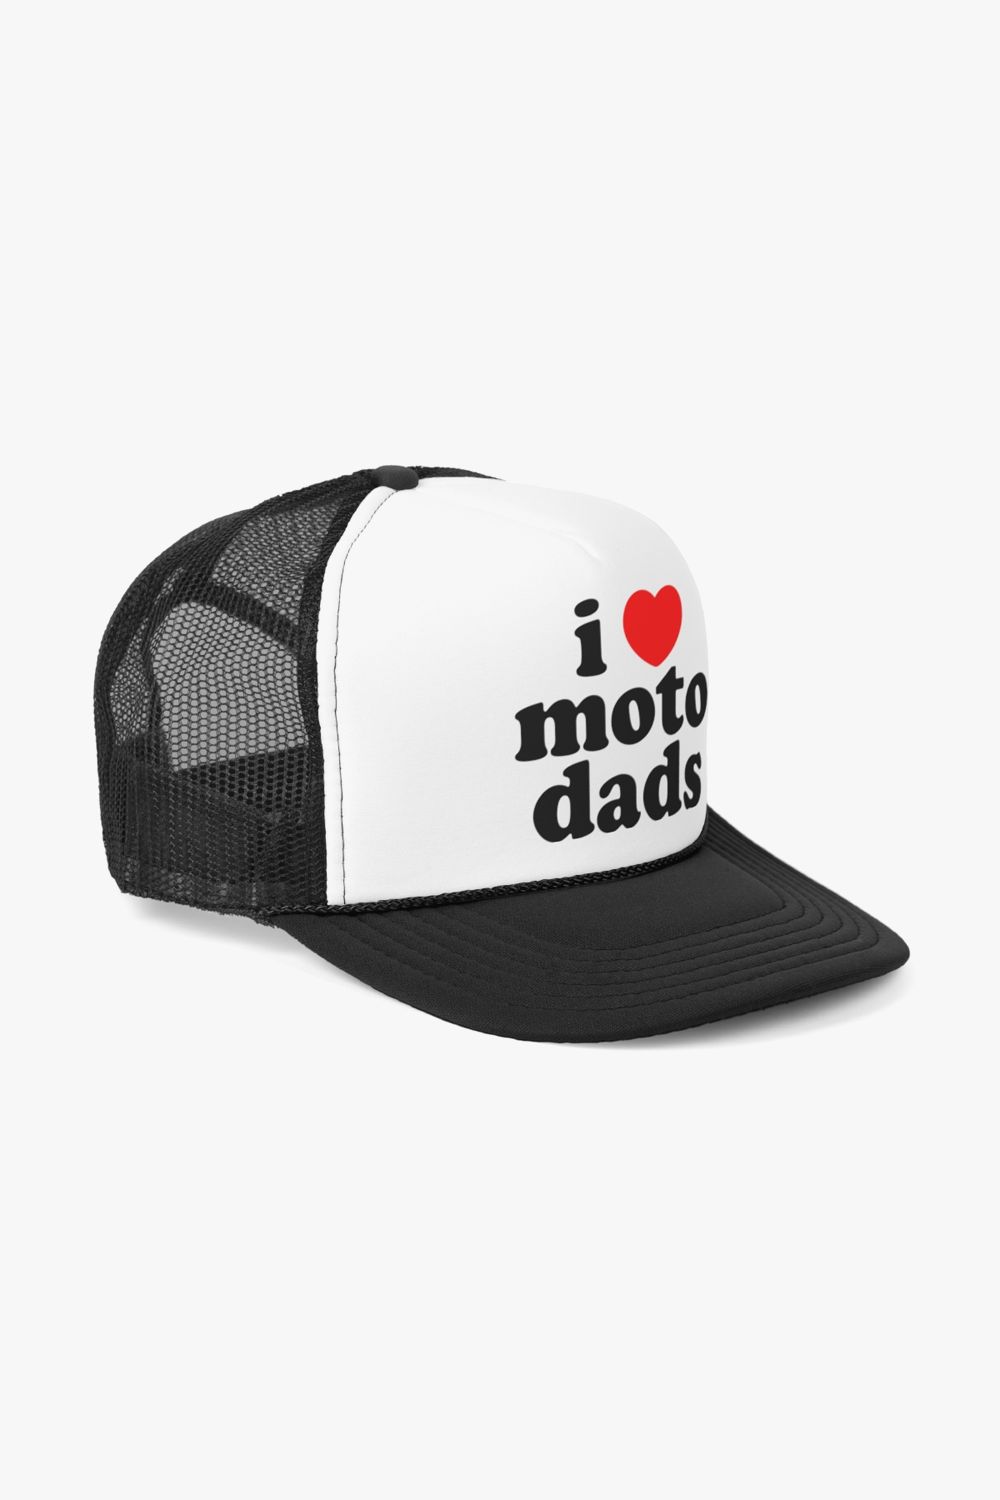 I Heart Moto Dads Trucker